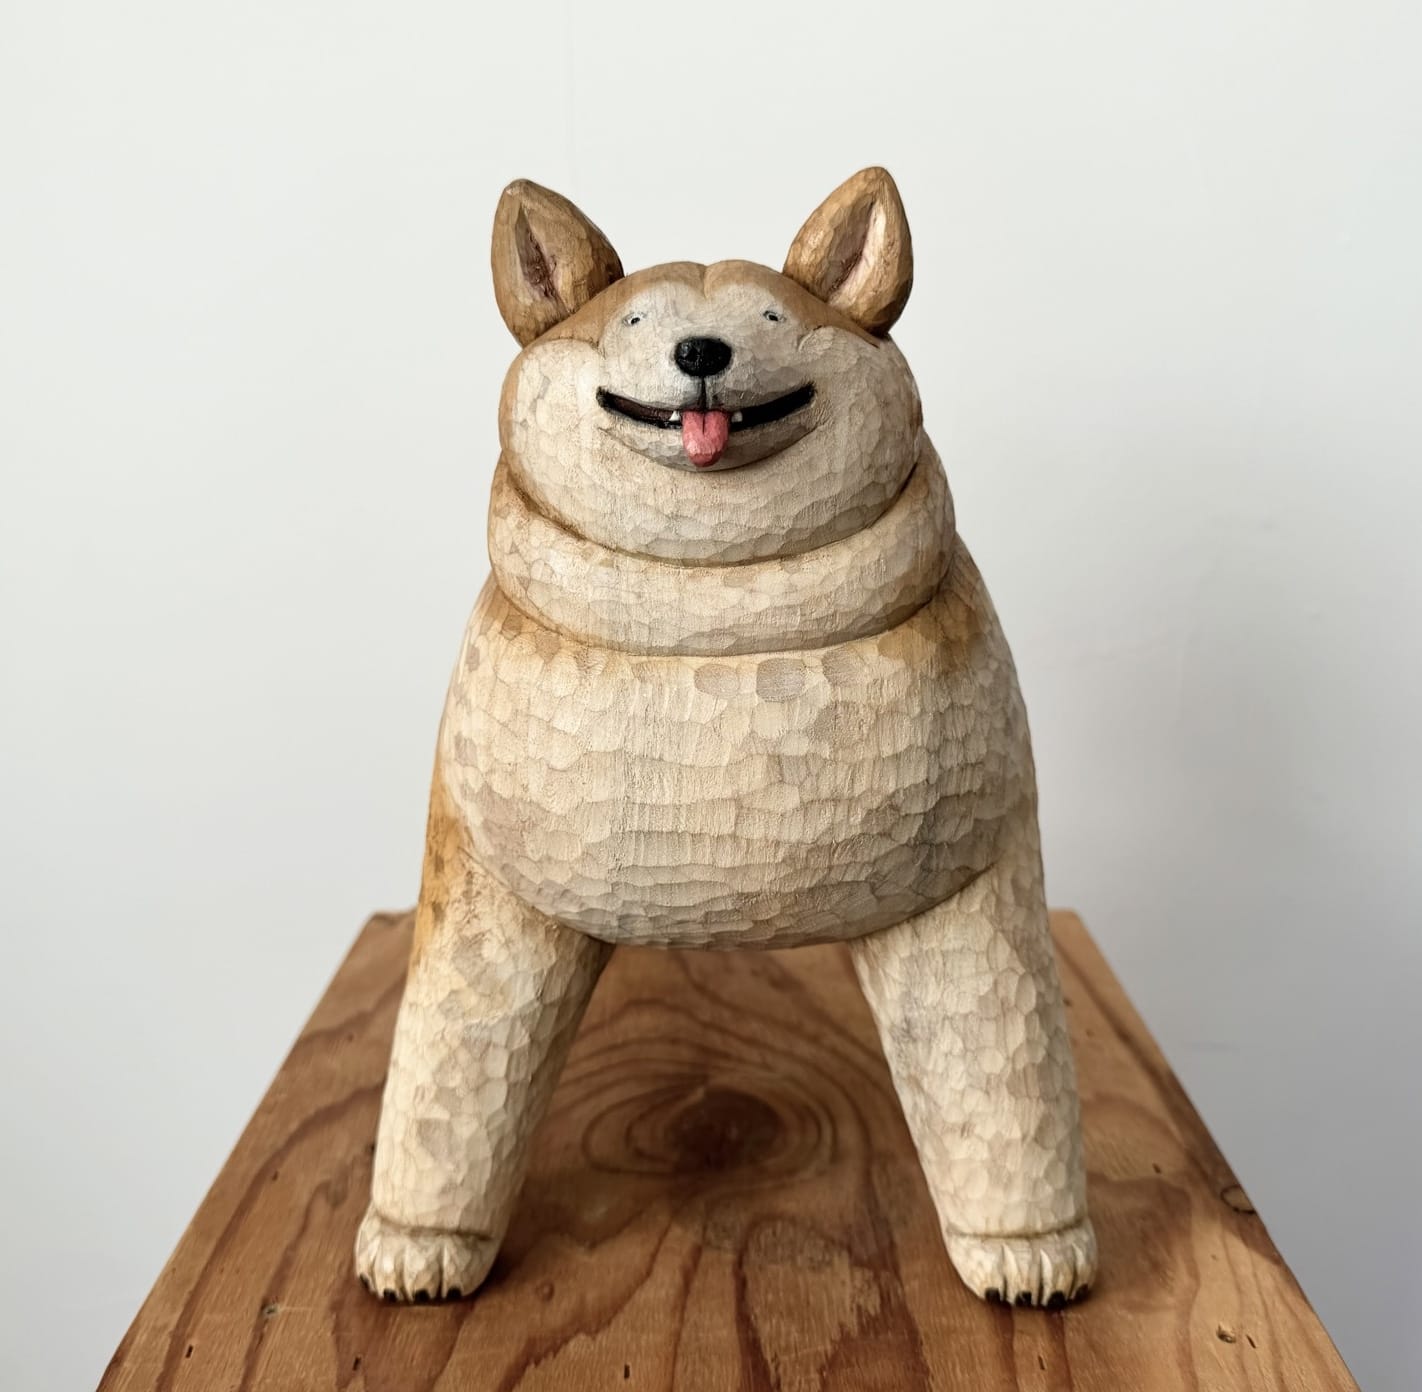 a playful shiba inu dog carved out of wood